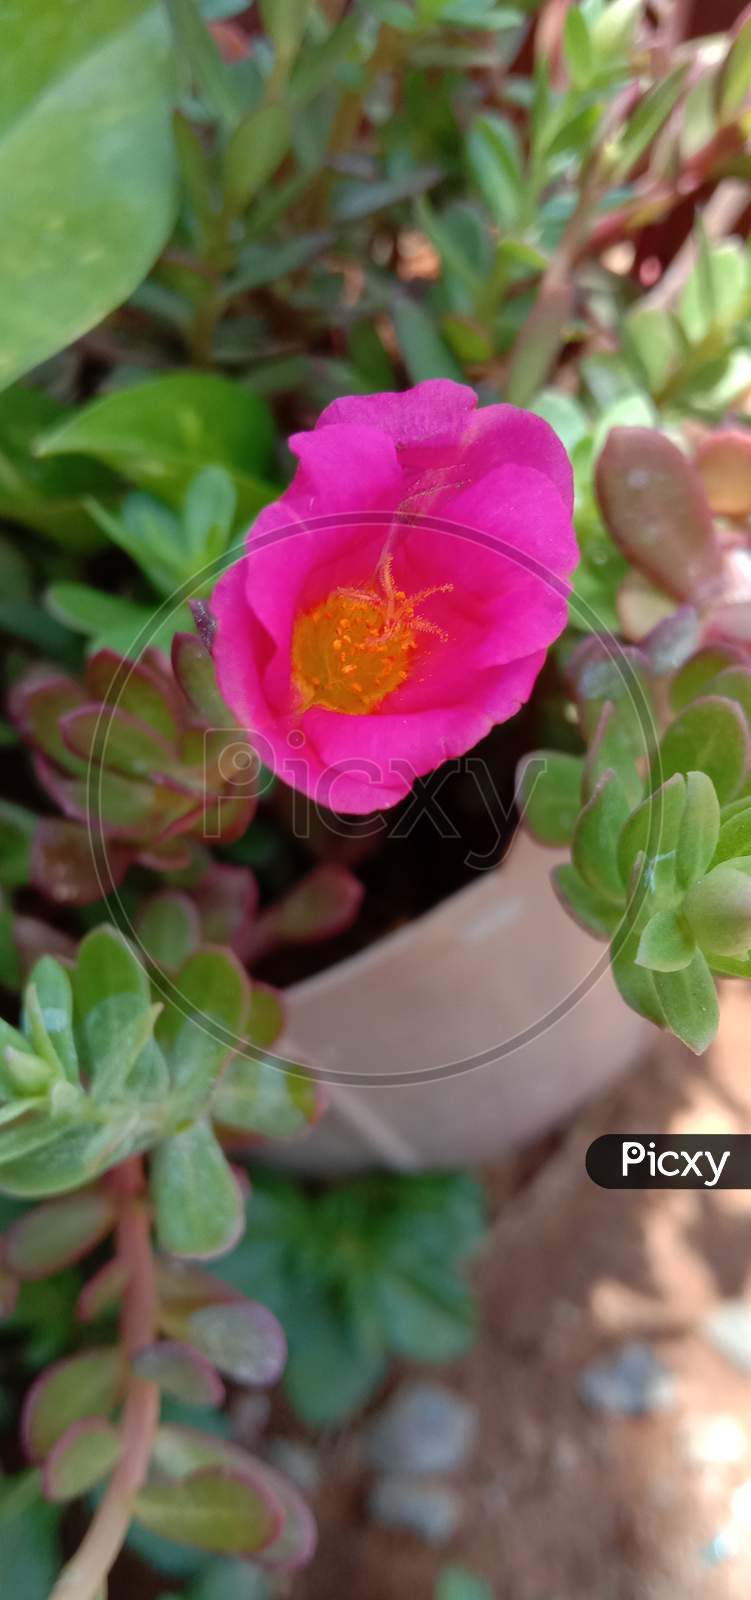 A pink flower in the garden